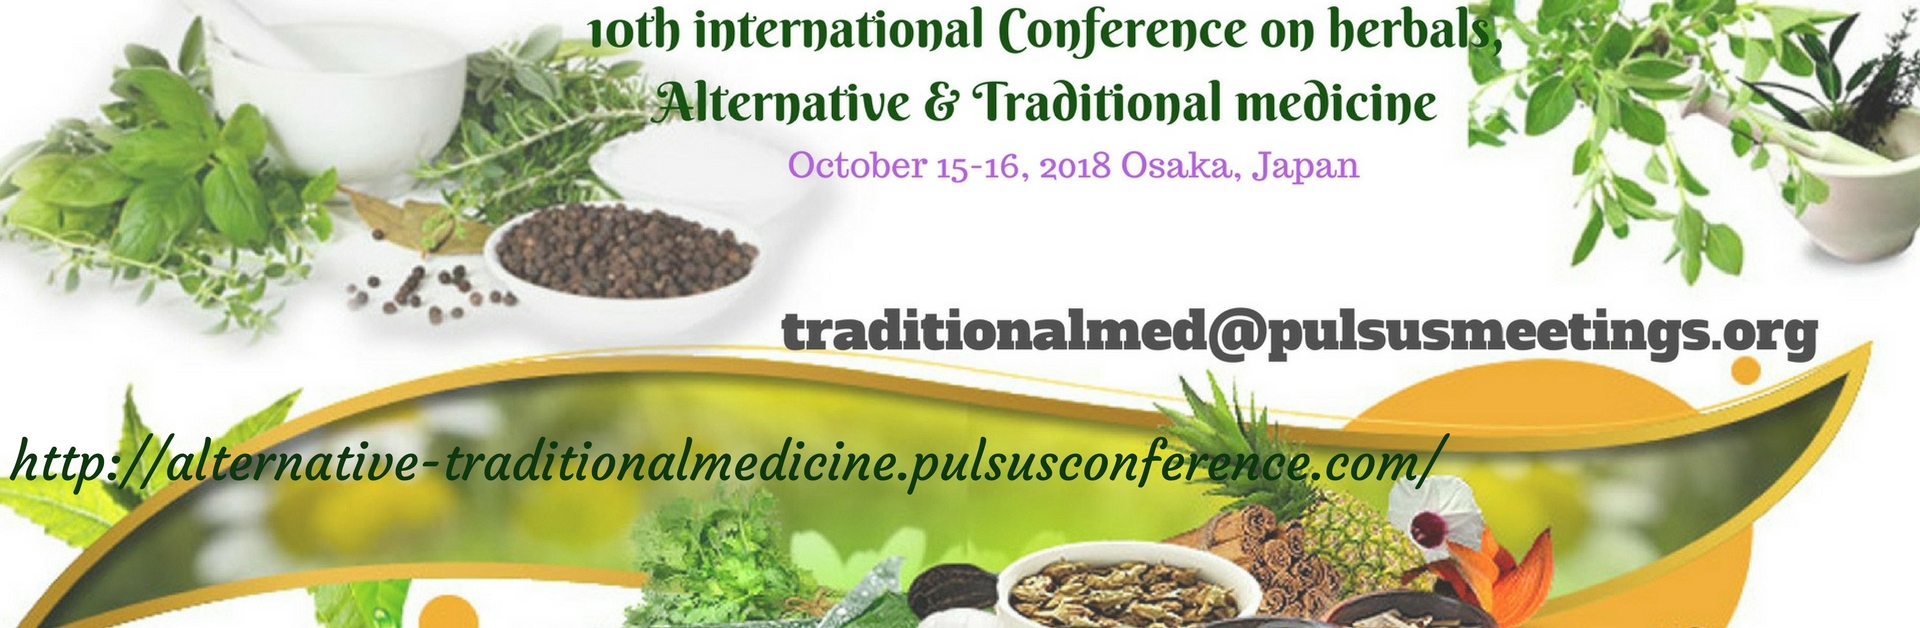 Health Care, Herbals, International Conference, Traditional Medicine, Osaka, Japan,